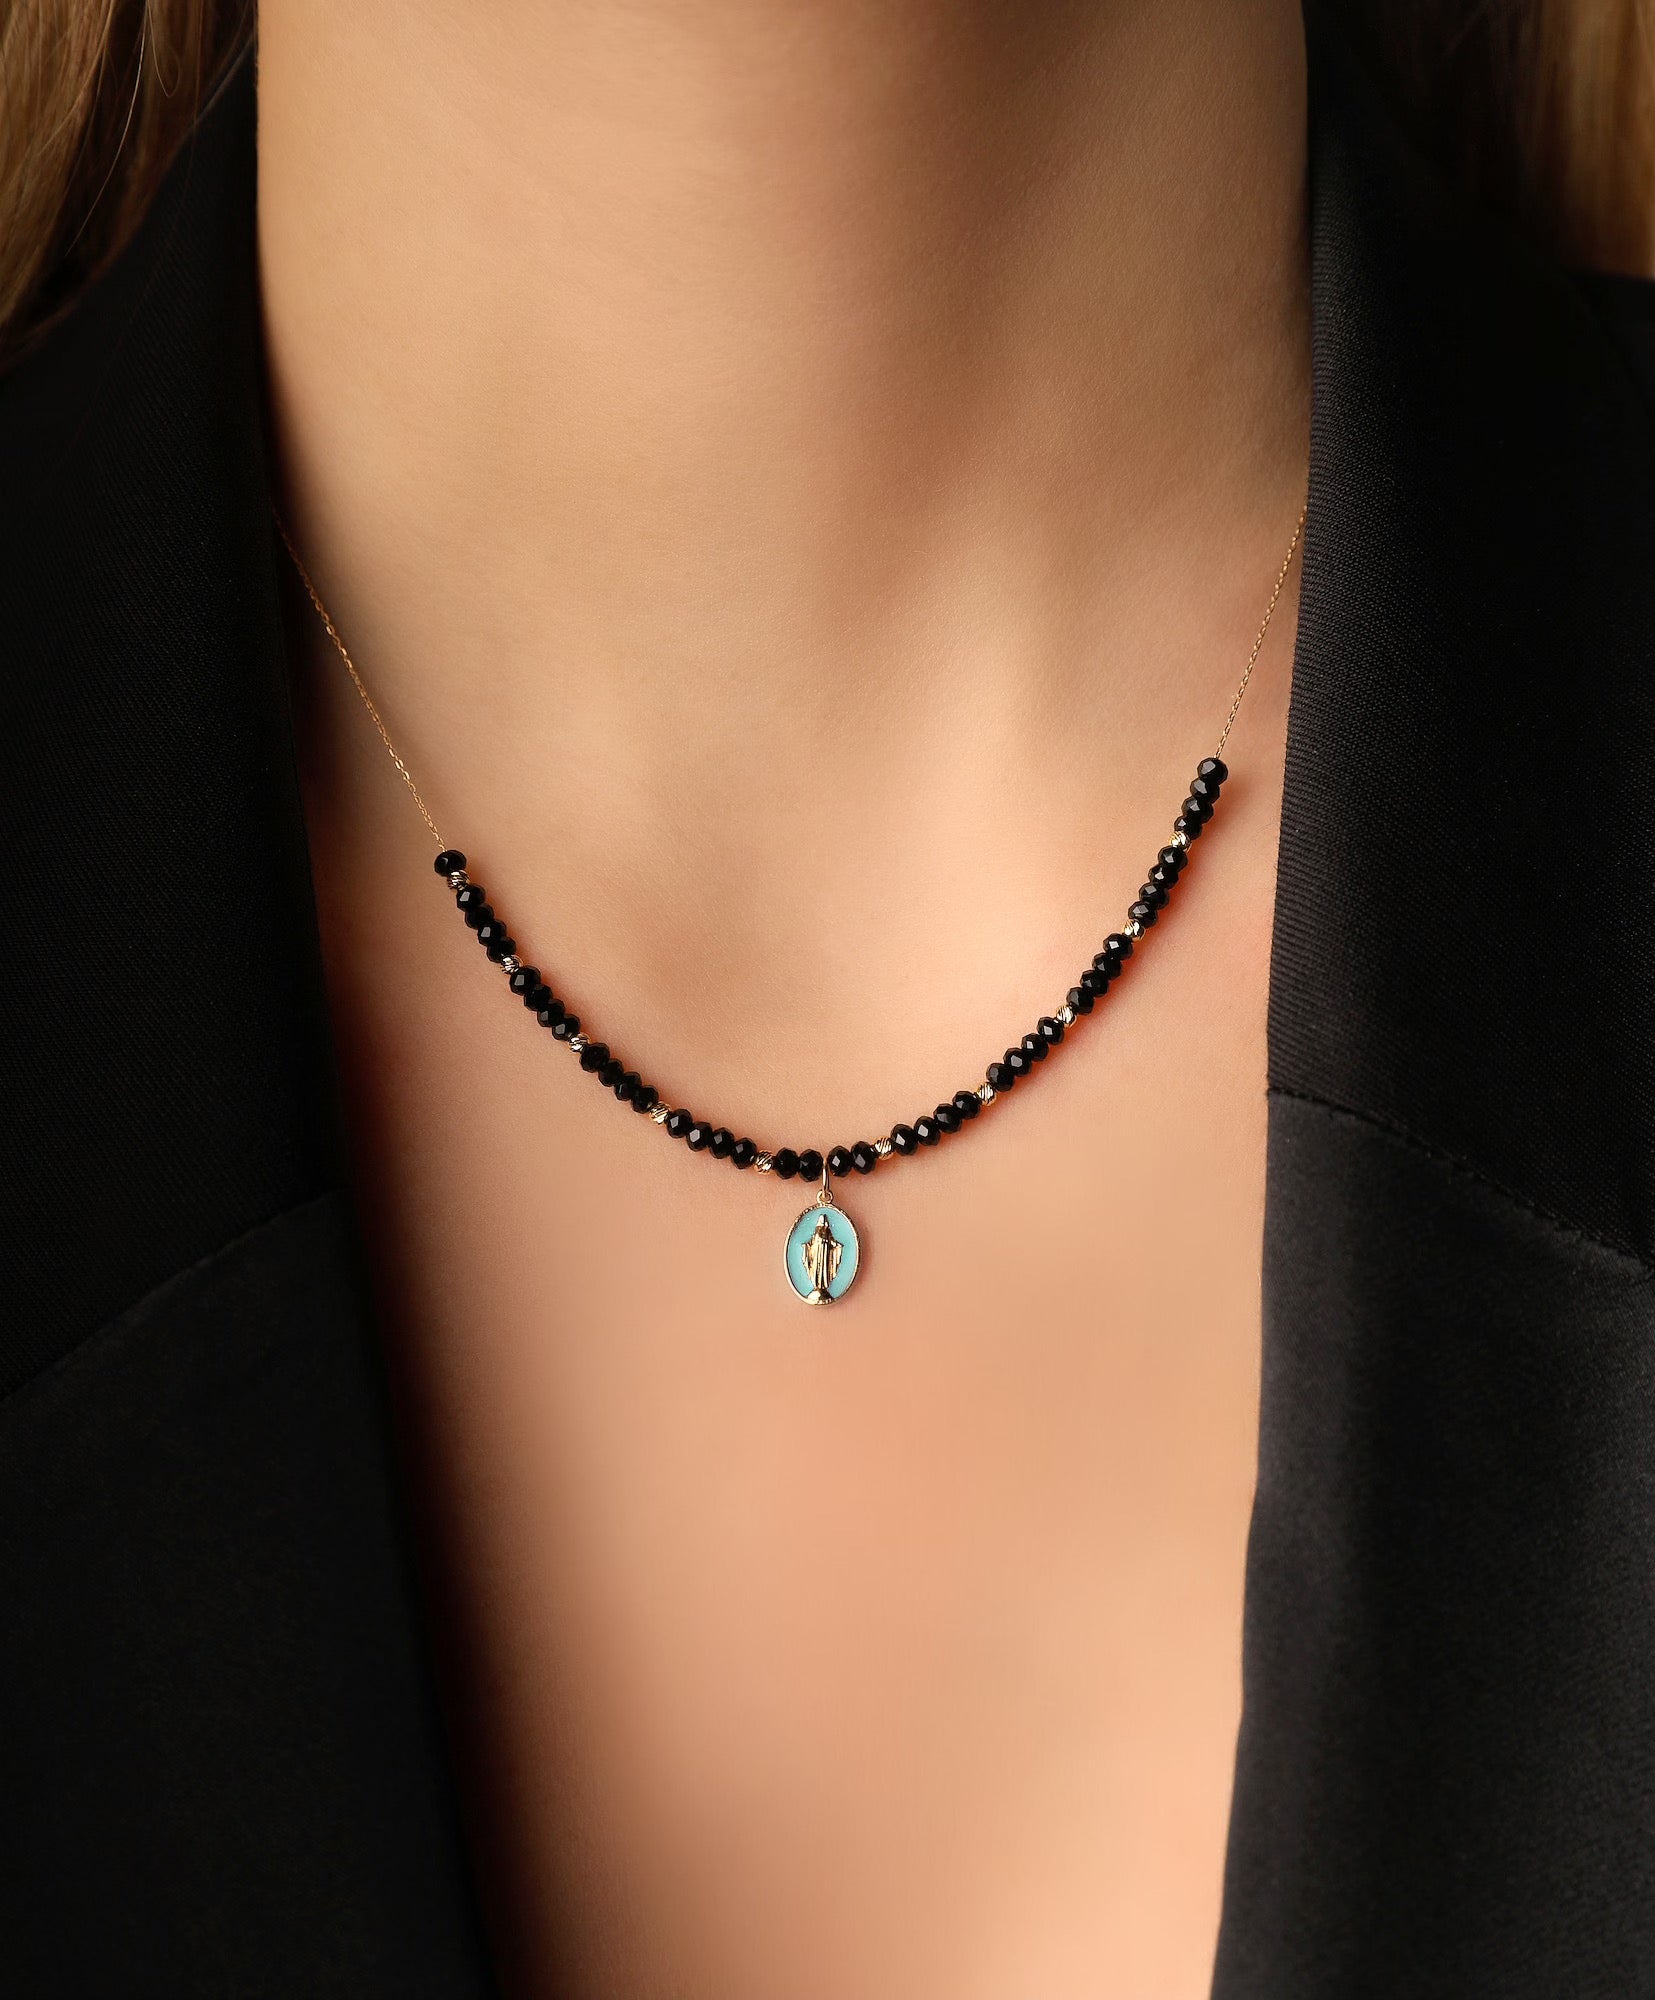 Trust Fund Baby Blue Necklace - Jewelry by Bretta